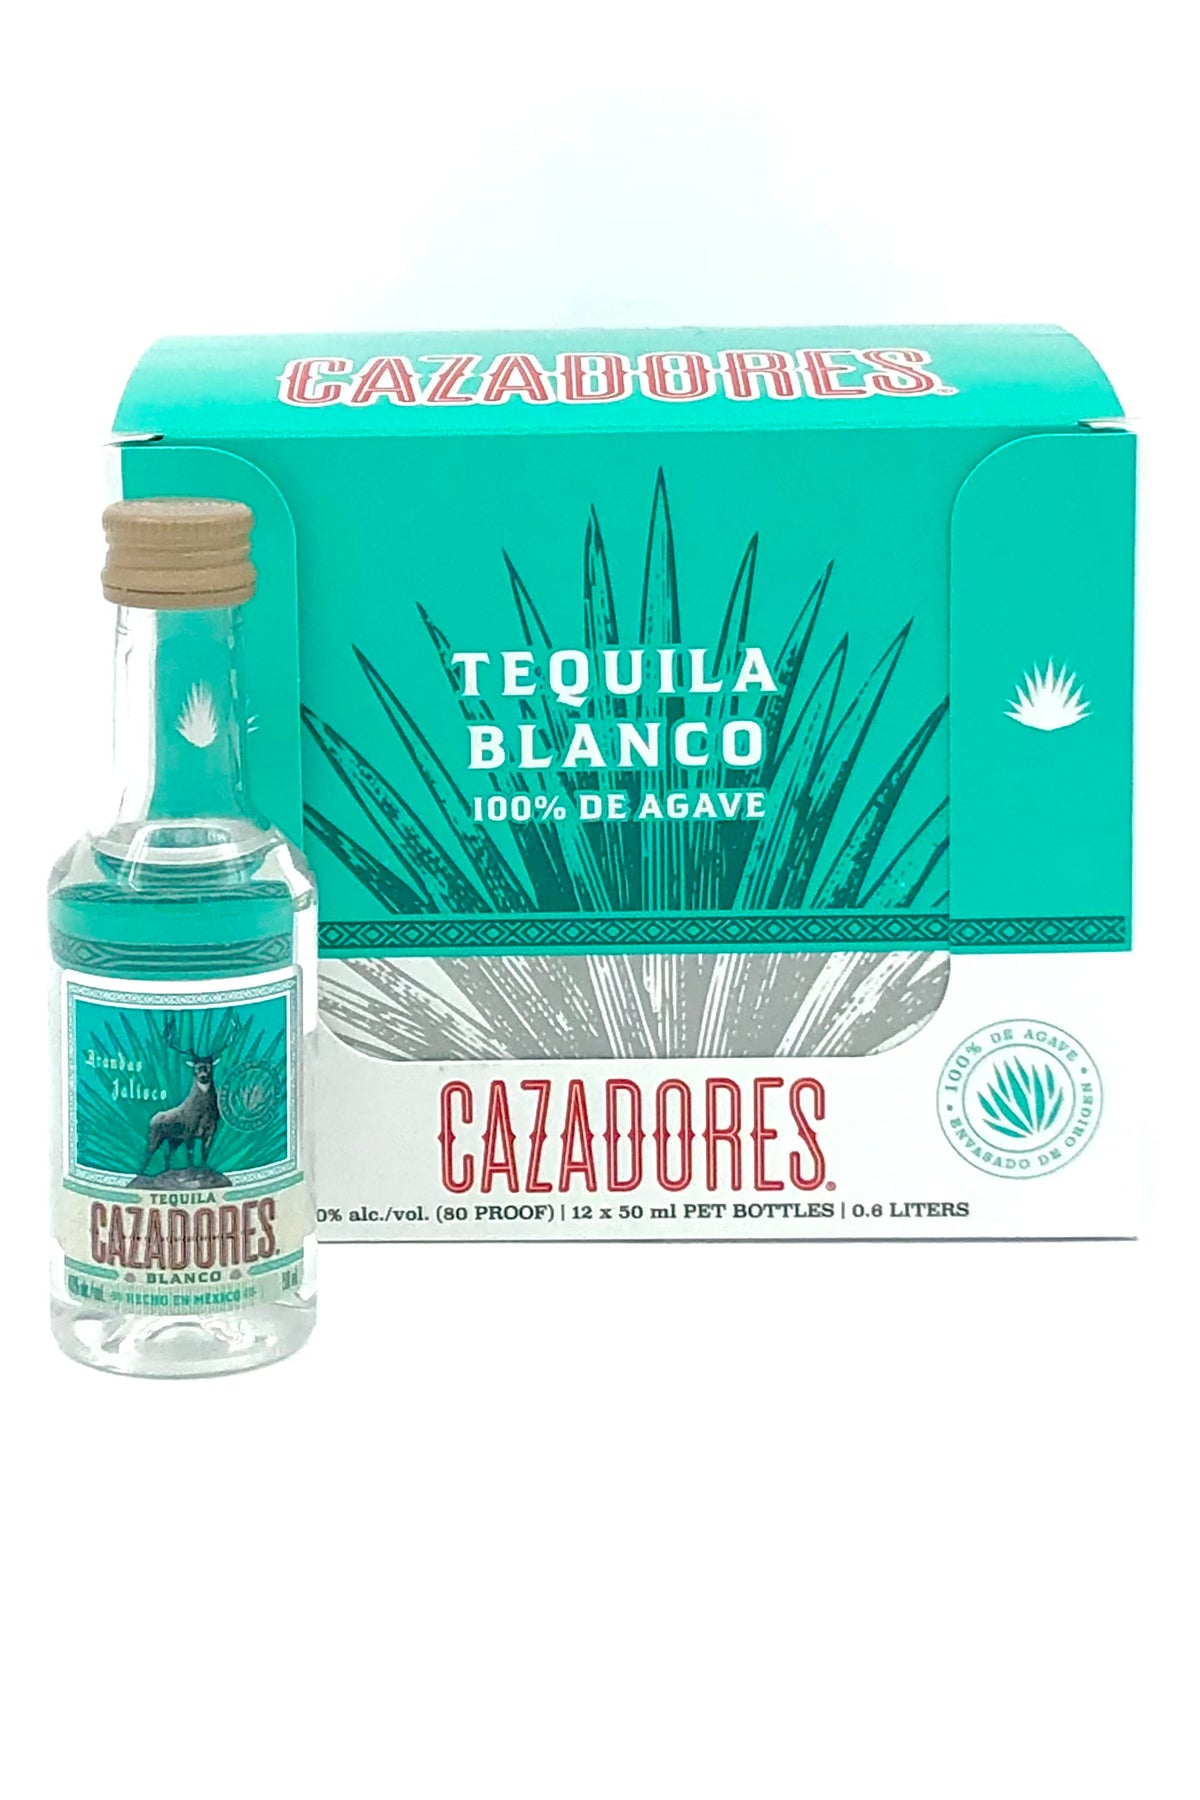 Cazadores Blanco Tequila 12 x 50 ml